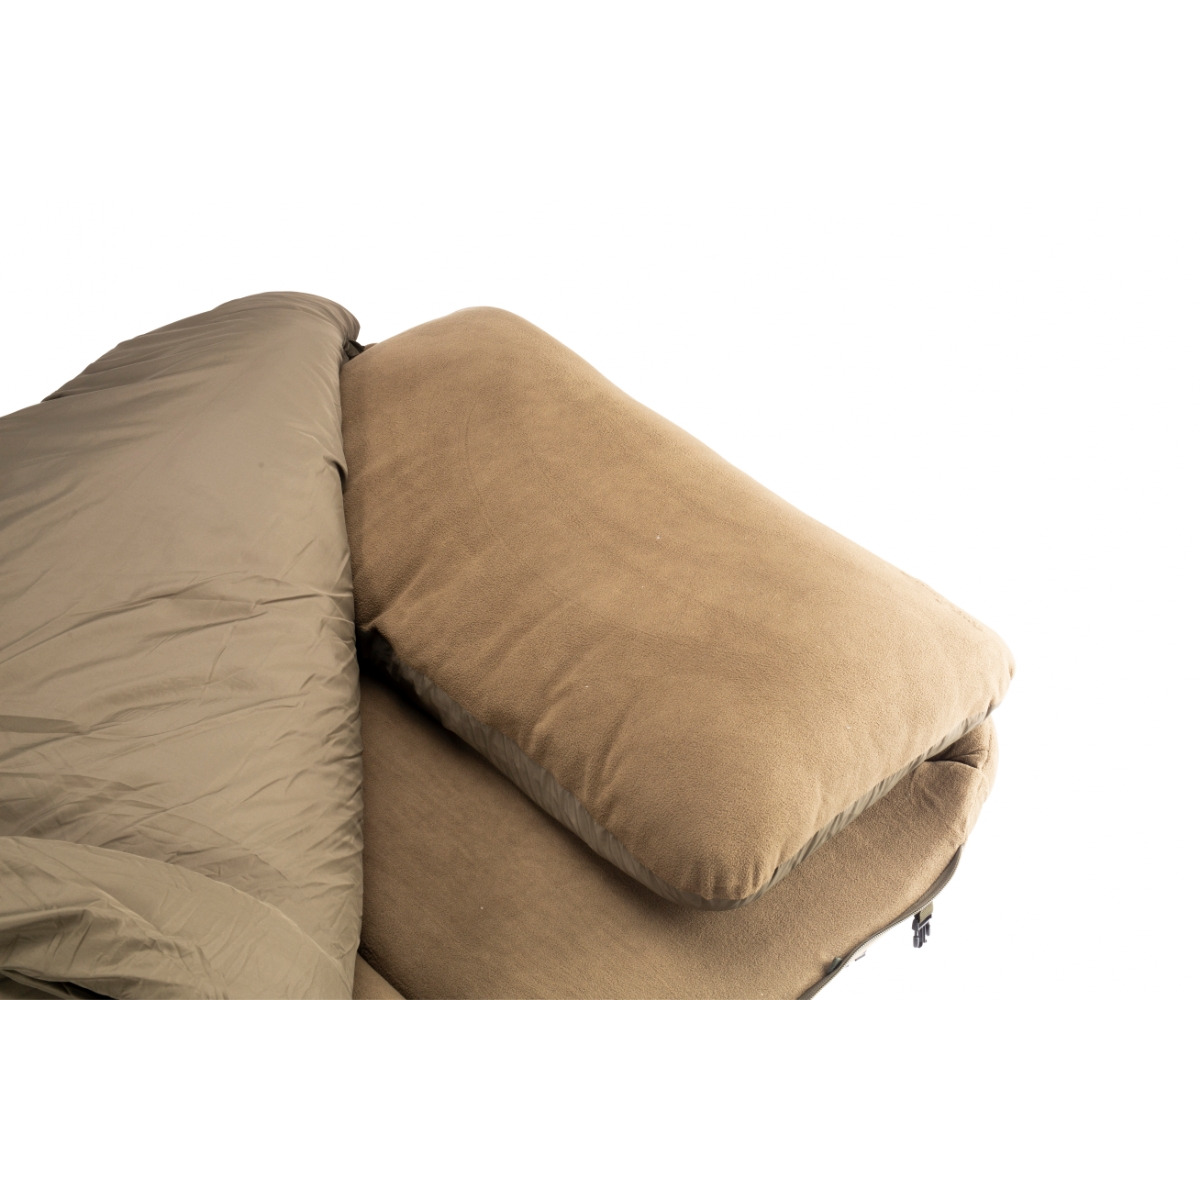 Nash Indulgence Pillow - Wide